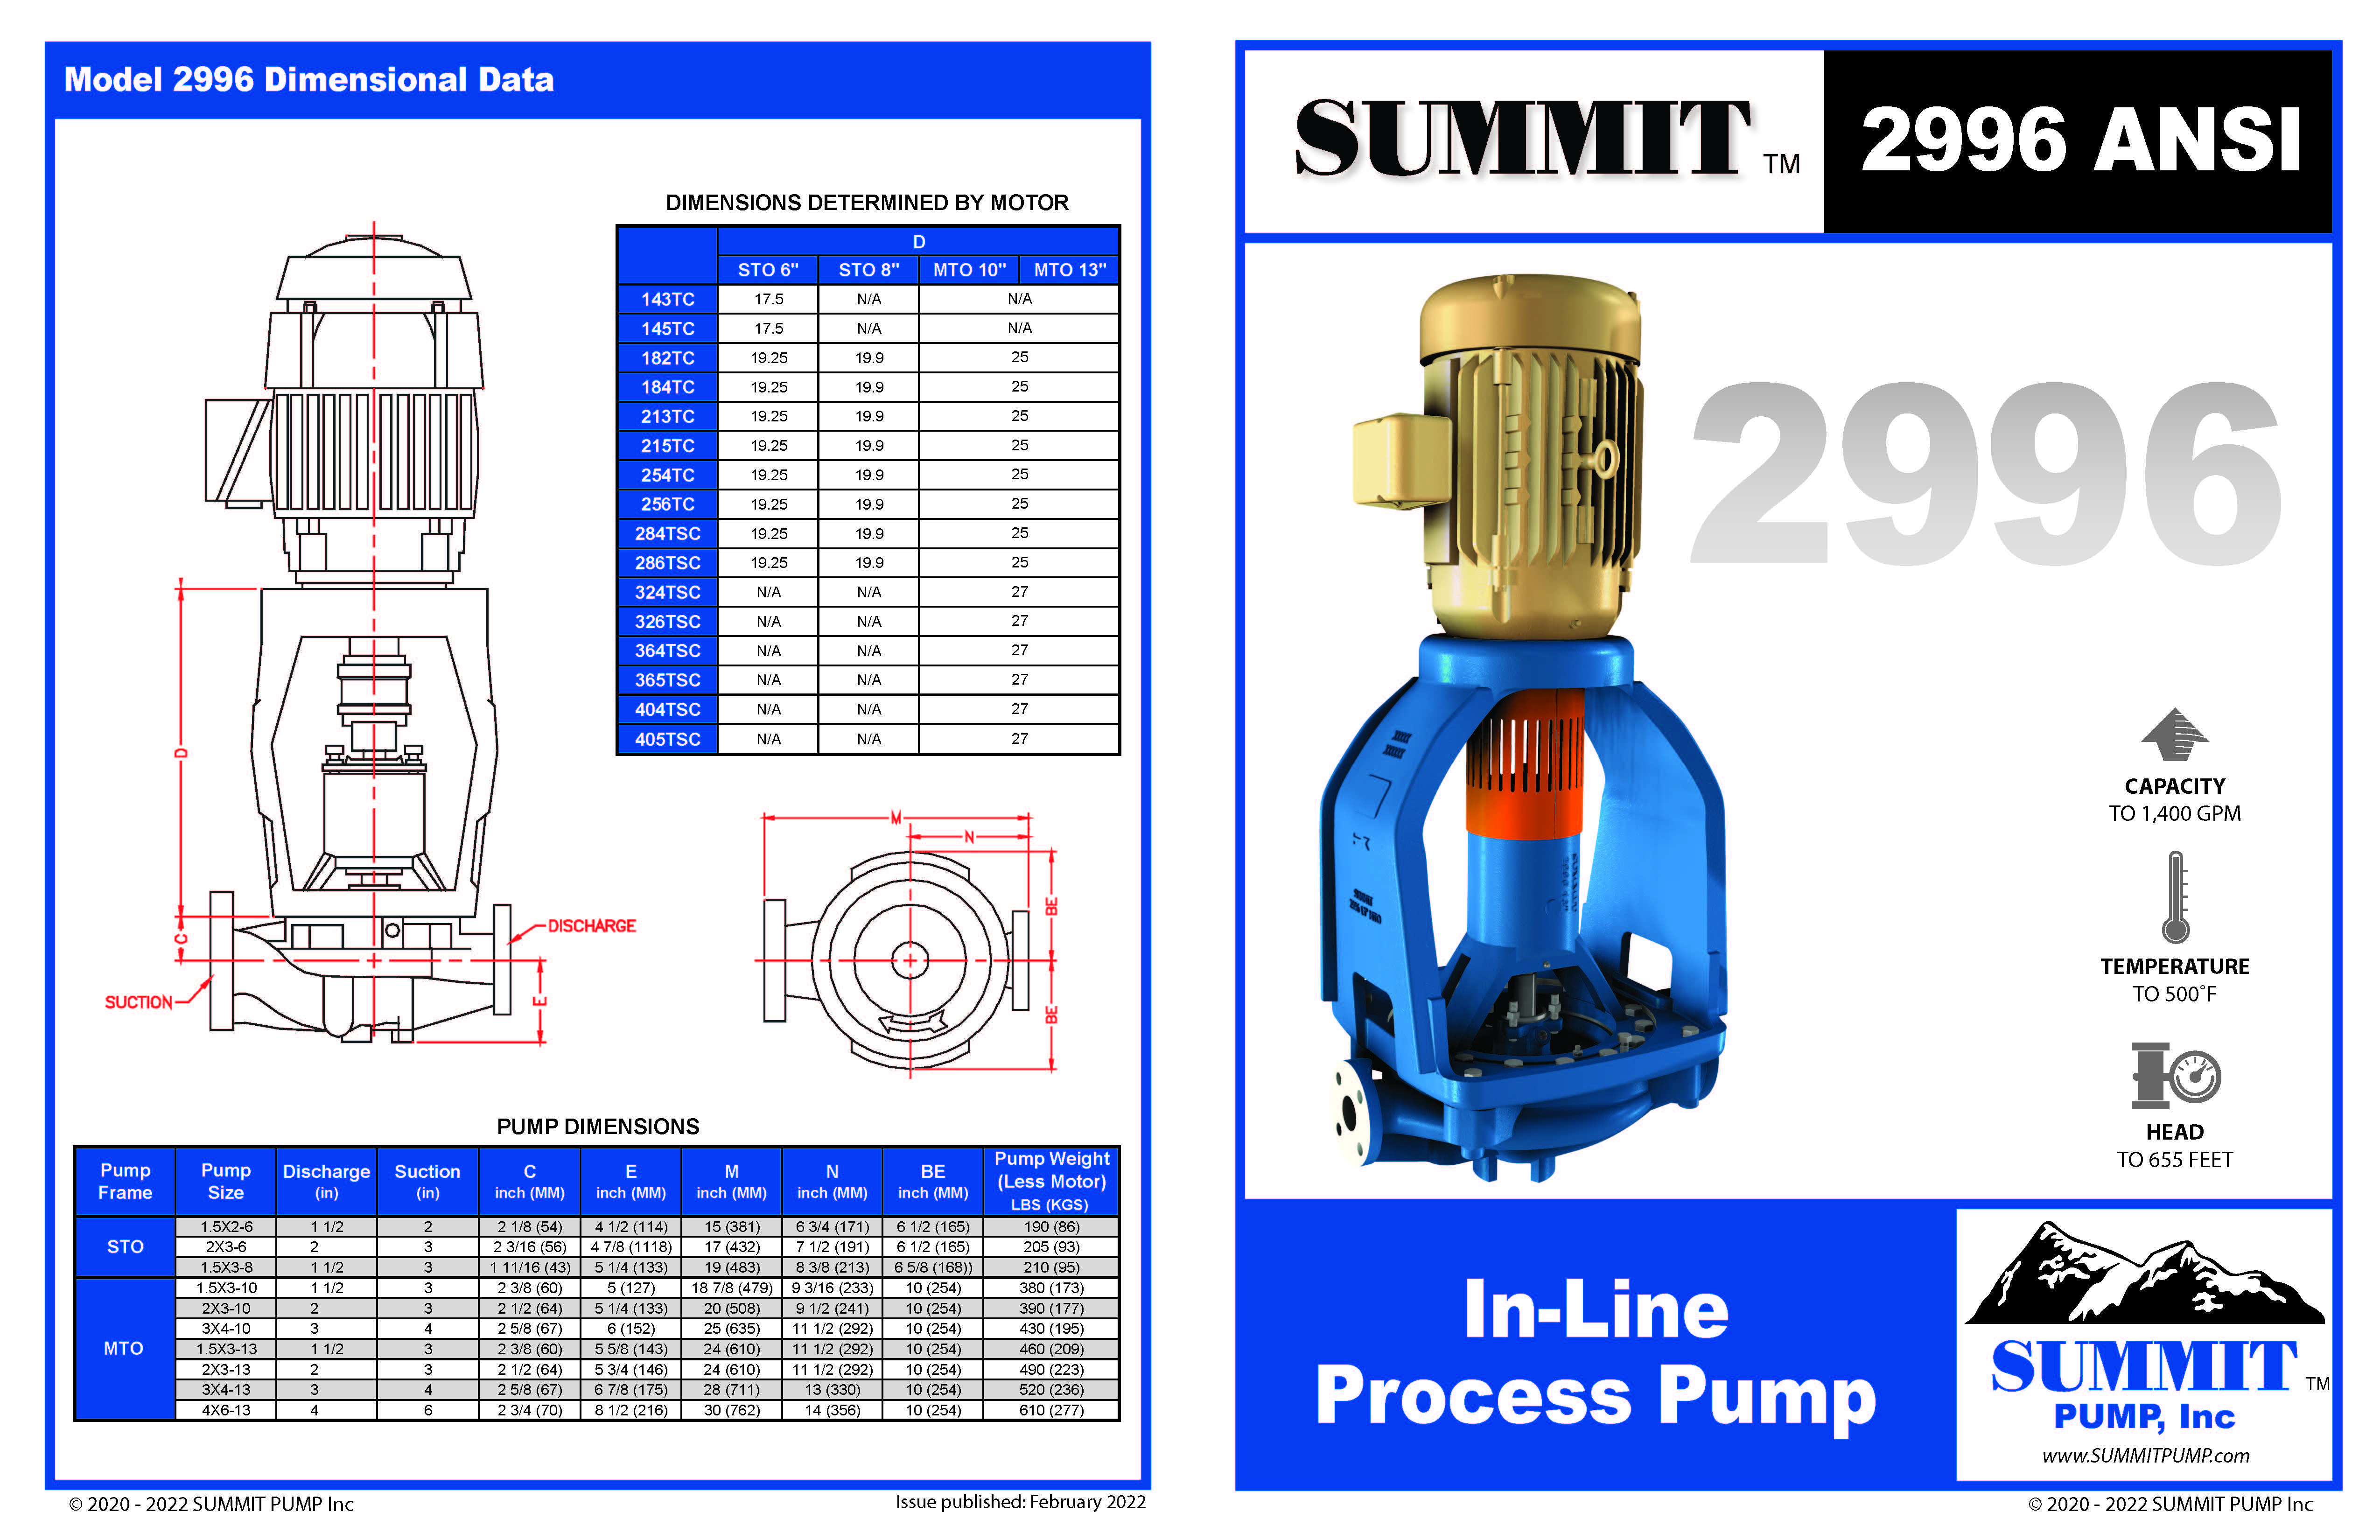 Summit 2996 ANSI Pump Brochure - English